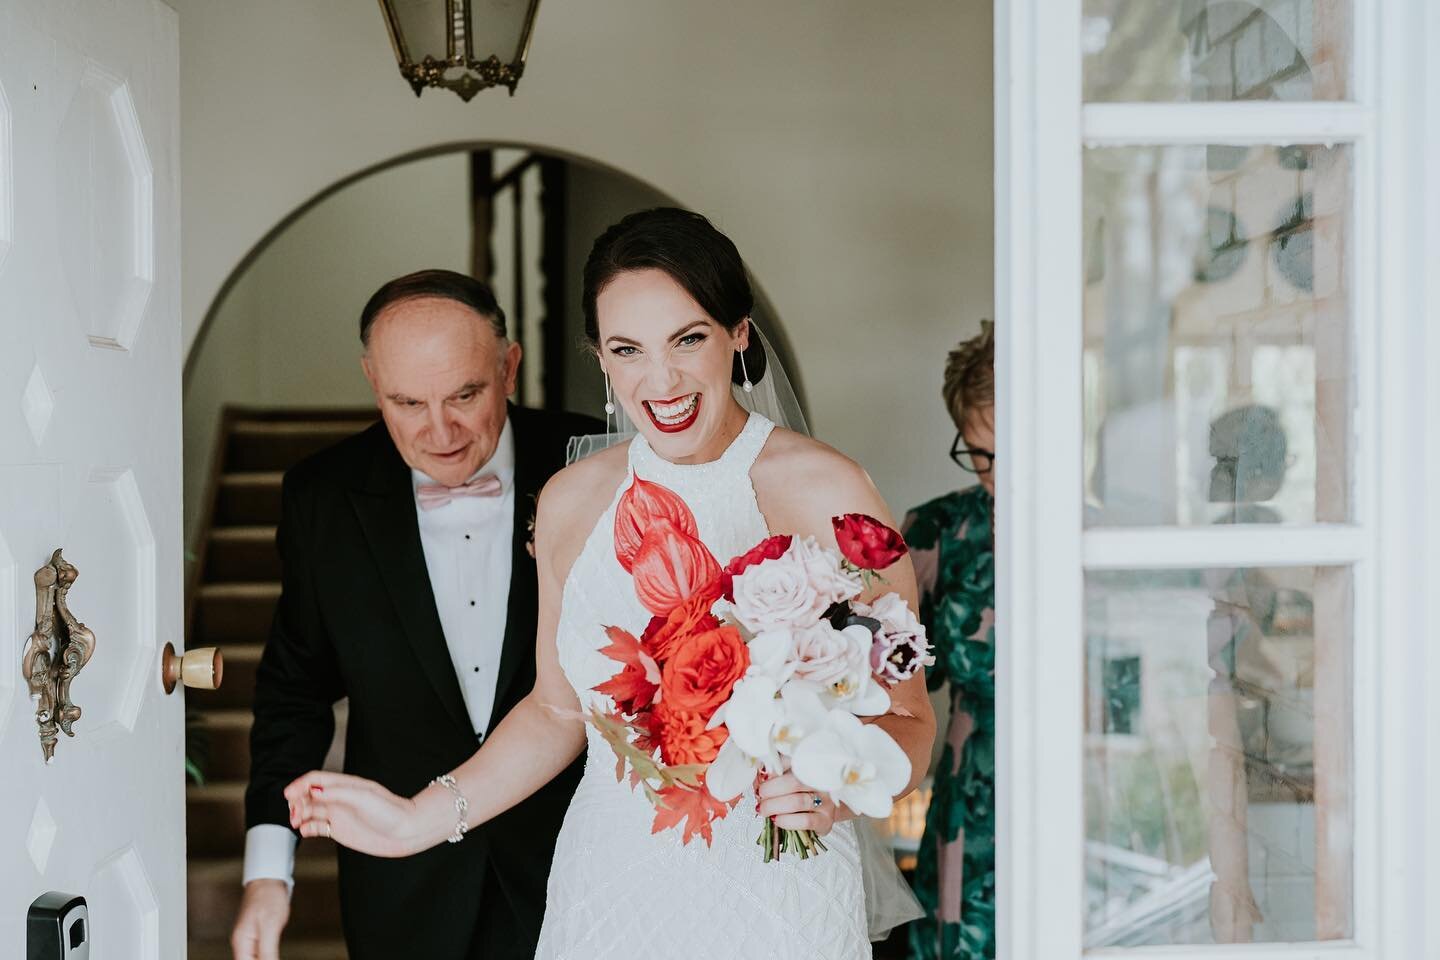 Simply beaming! On her way to marry her man ❤️
Pic: @anchorandhopephotography 
Venue: @Projekt3488
Celebrant: @celebrantkate 

#yarravalleywedding
#yarravalleyweddingflorist
#nofloralfoam
#weddingfloristmelbourne
#melbournebride
#yarravalleyceremony
